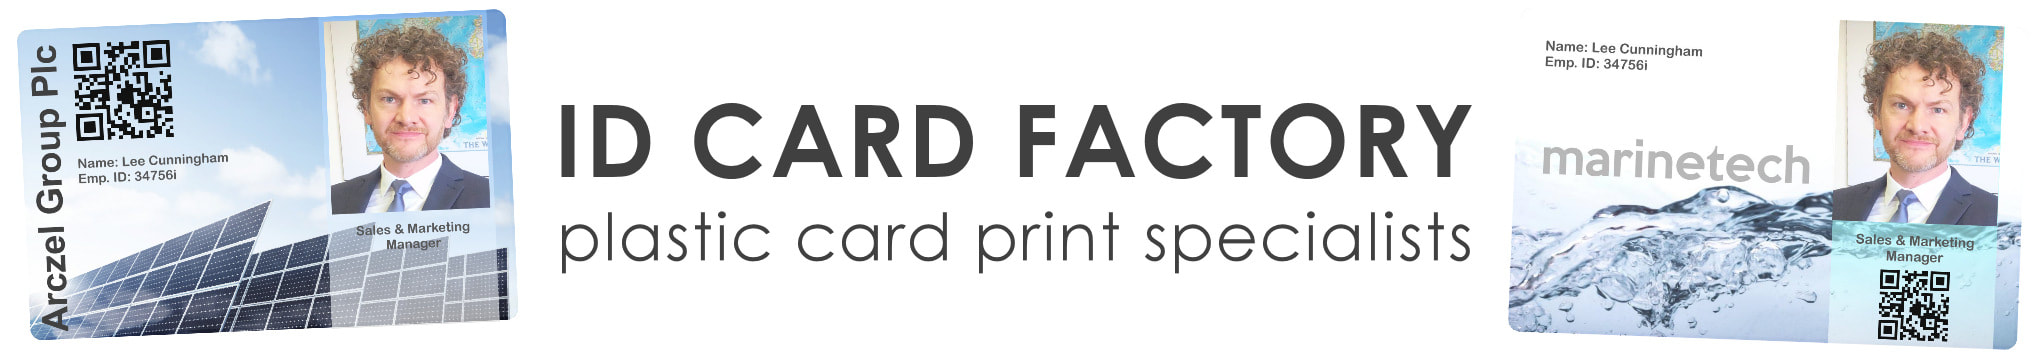 Worcester ID card printing | staff photo ID cards | company employee ID card print service | Local Identity Card Printing | Custom Design 